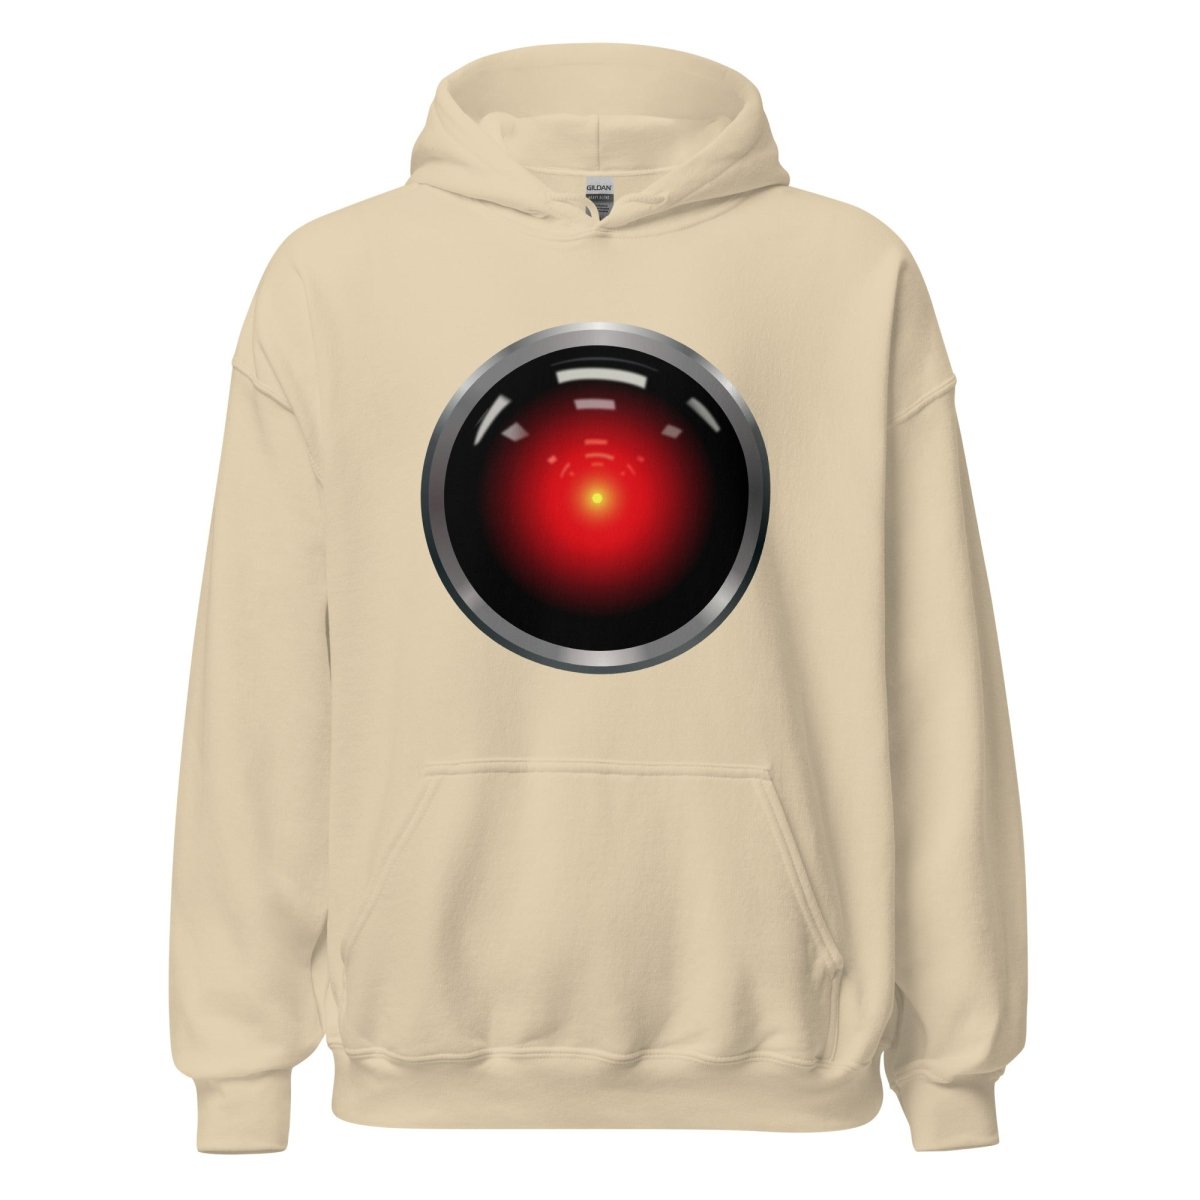 HAL 9000 Hoodie (unisex) - Sand - AI Store